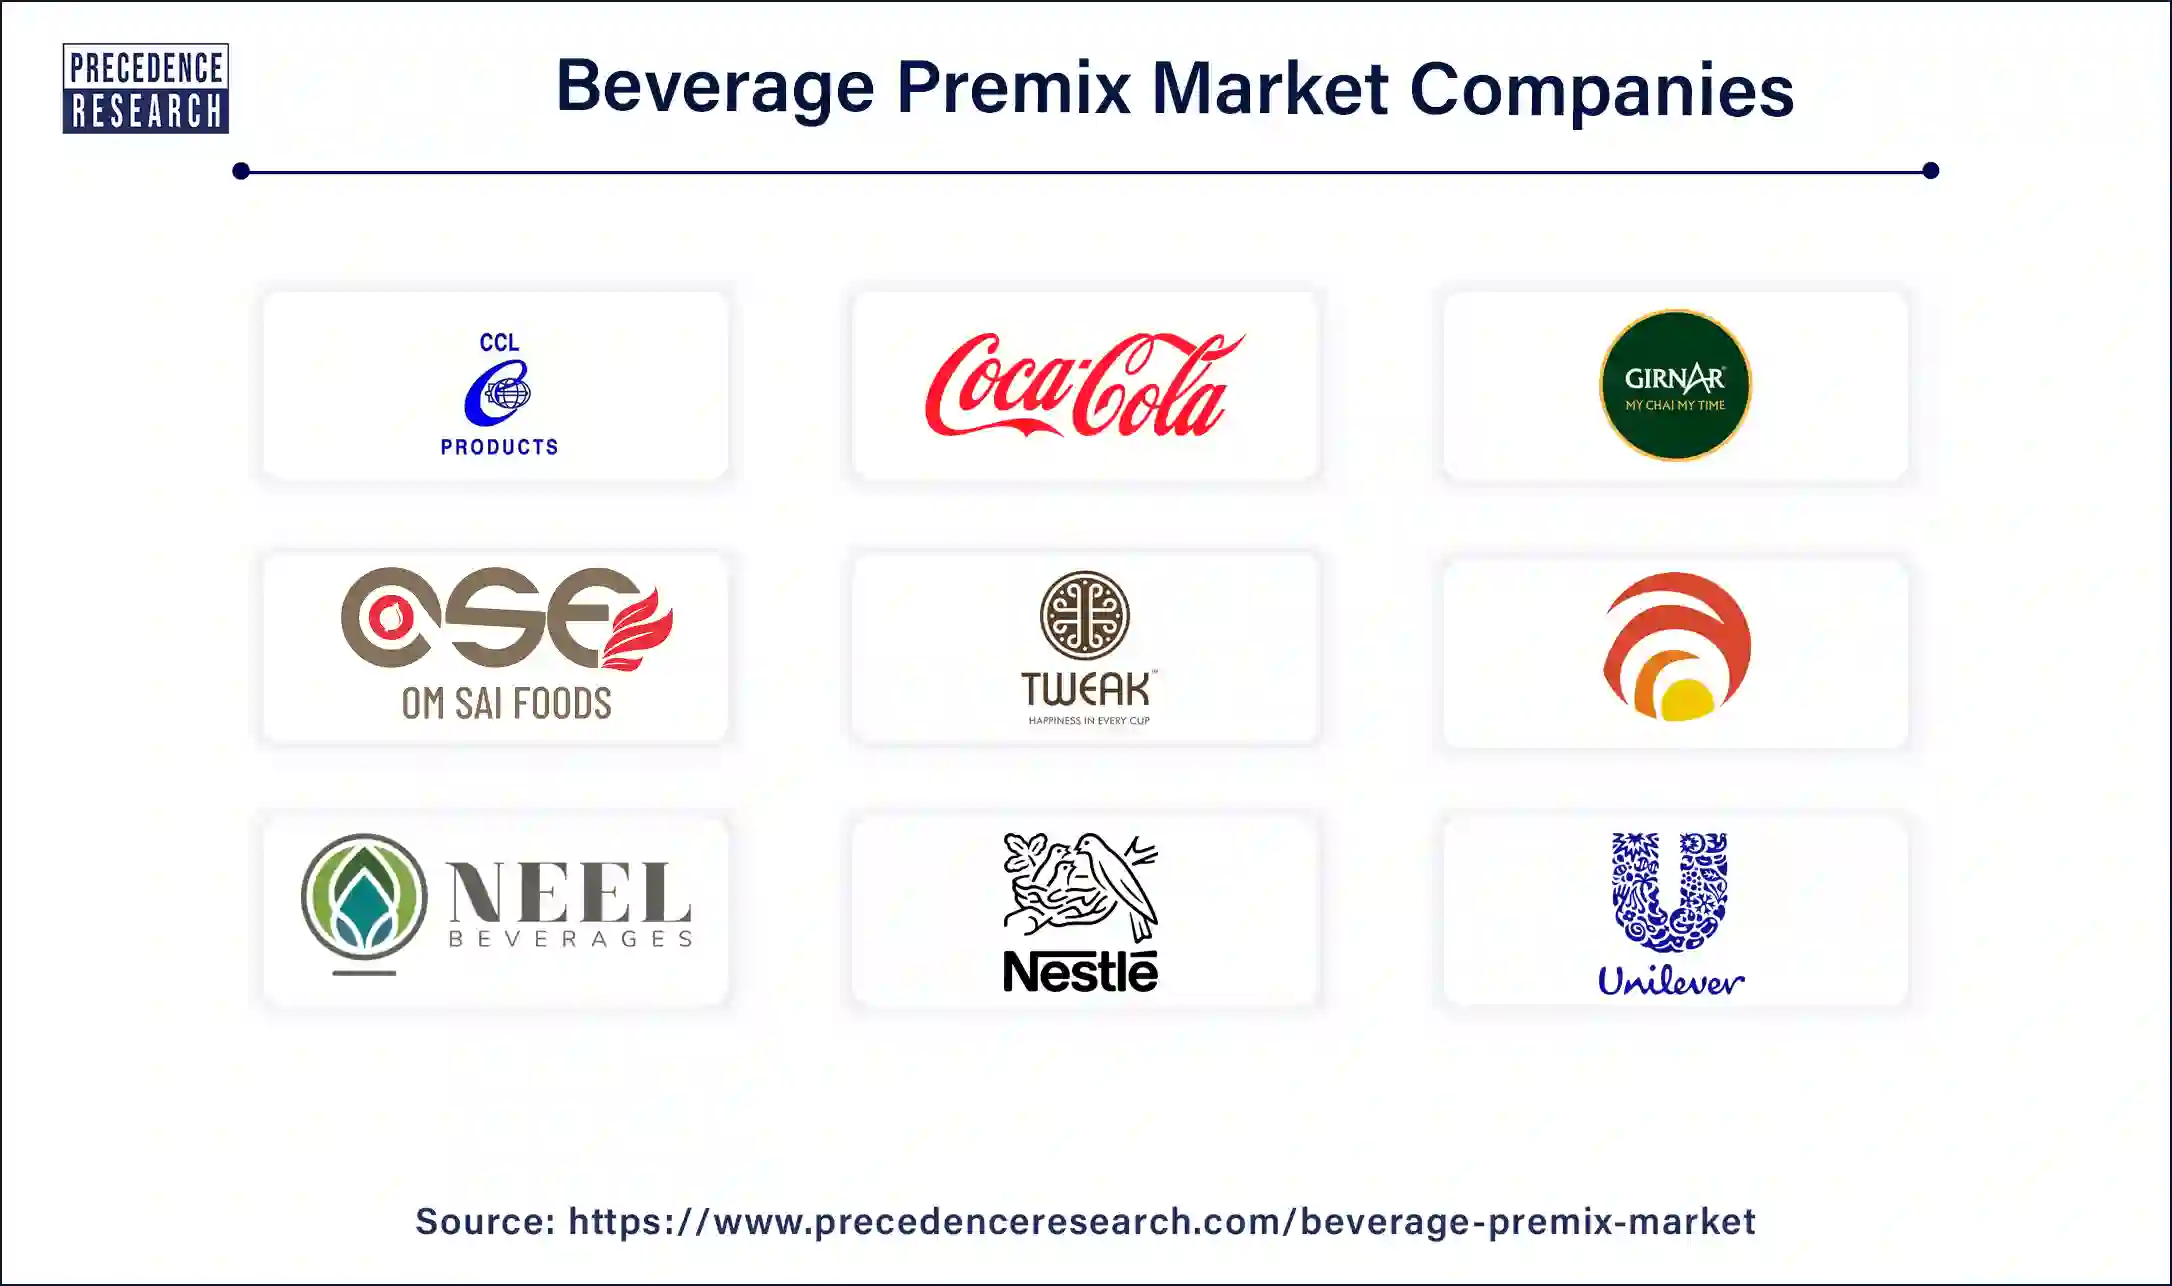 Beverage Premix Companies